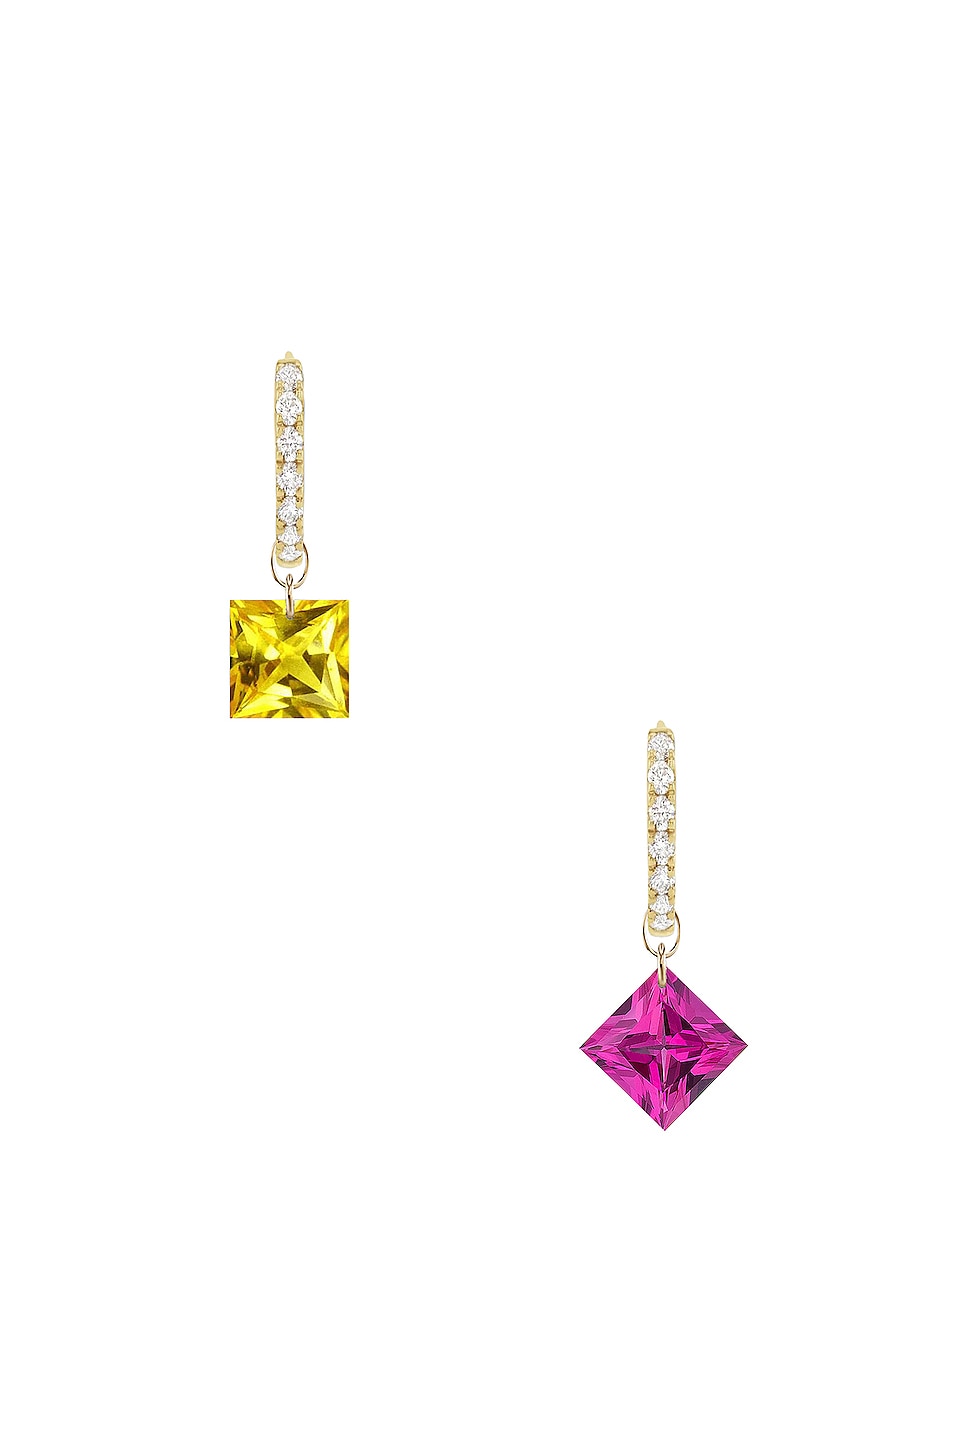 Image 1 of ILENE JOY x Elizabeth Sulcer for FWRD Airlie Huggie Earrings in Pink Sapphire, Yellow Sapphire, Diamonds, & 18K Gold